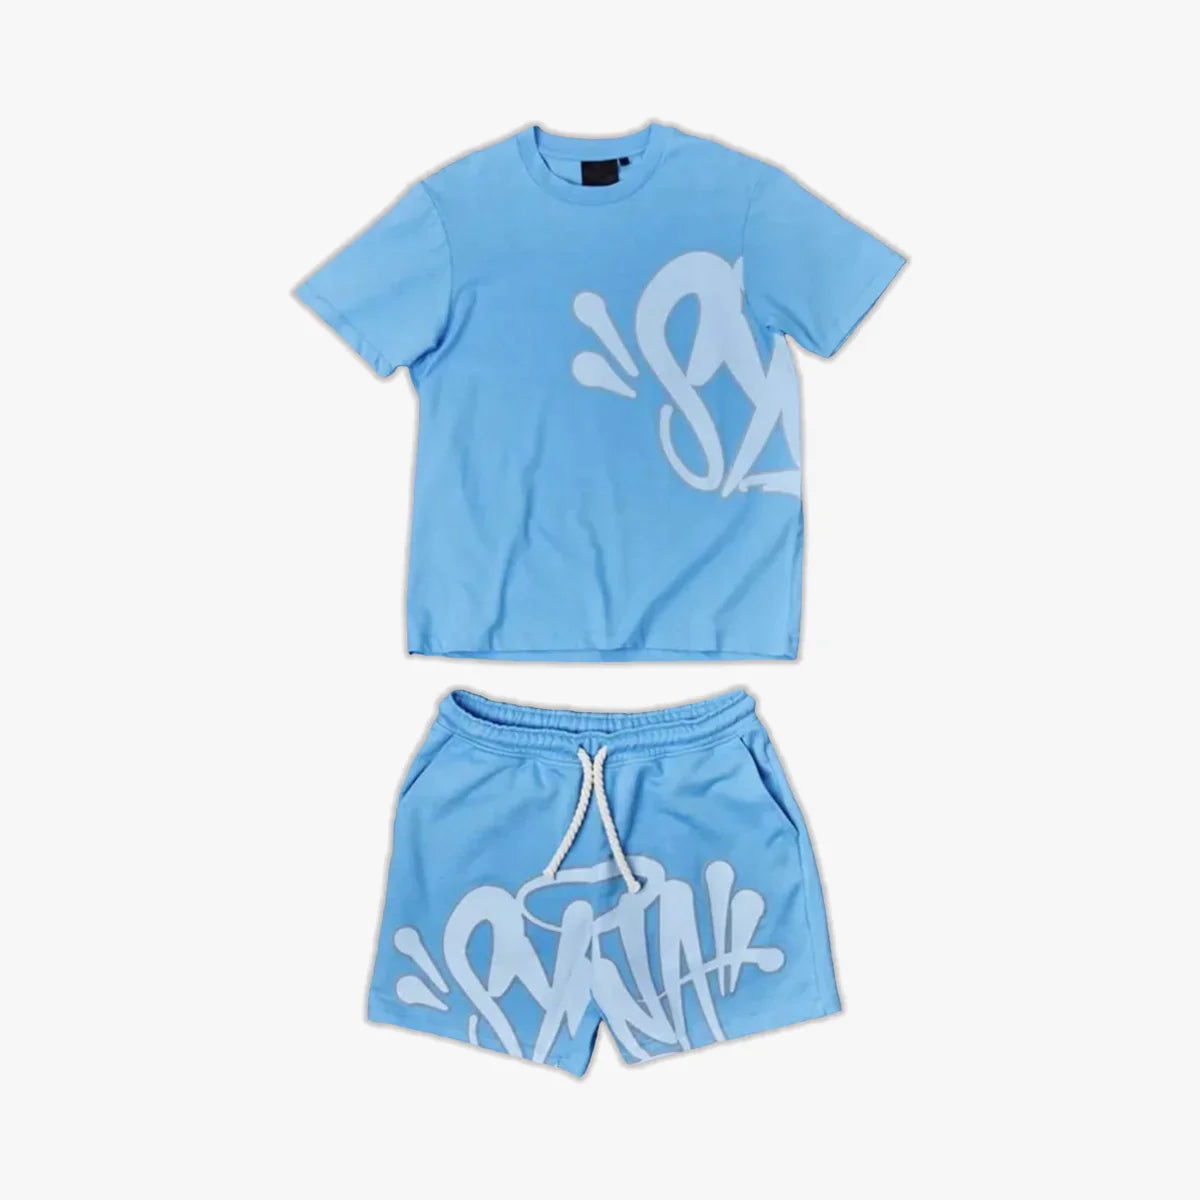 Synaworld T-shirt & Short Set - Two Tone Blue